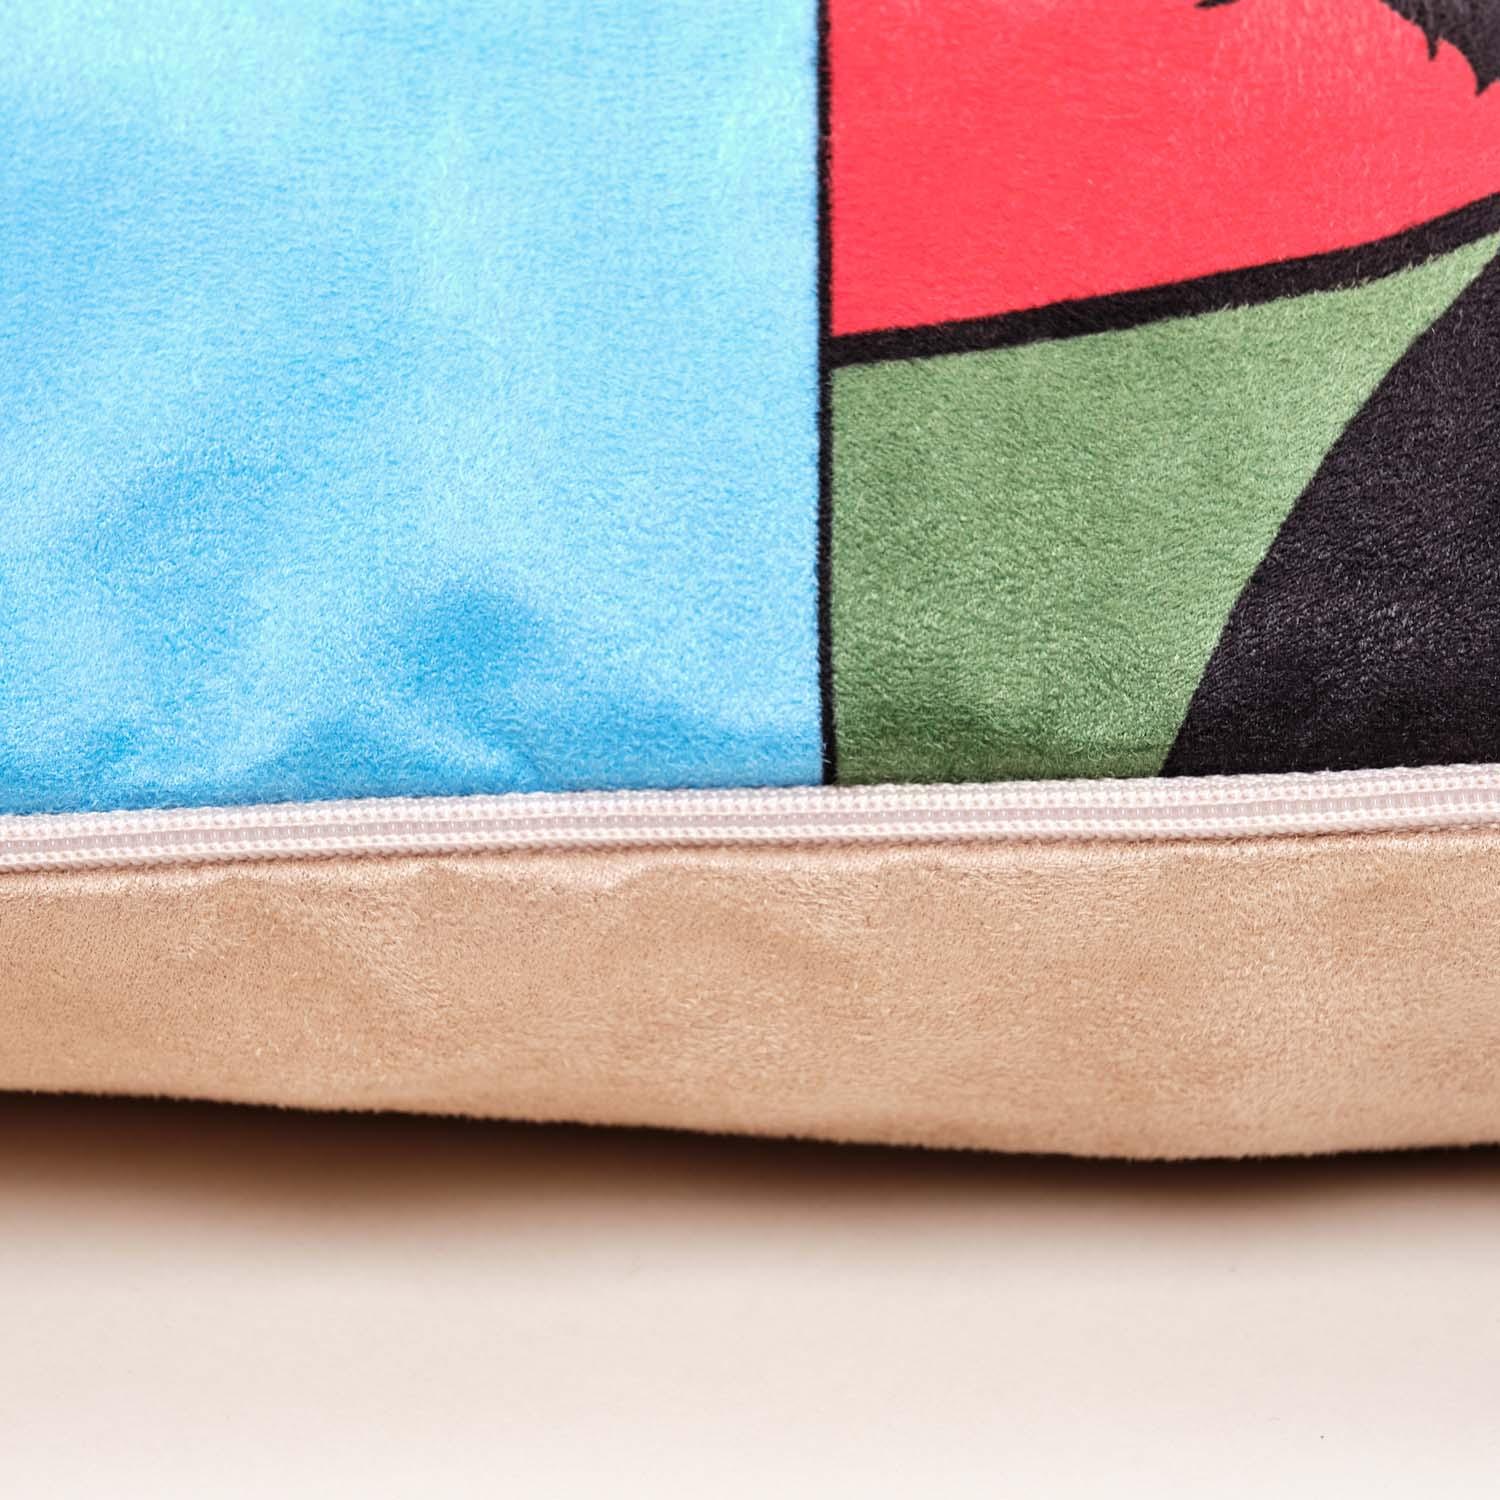 Curve & Line - Art Deco Cushion - Handmade Cushions UK - WeLoveCushions